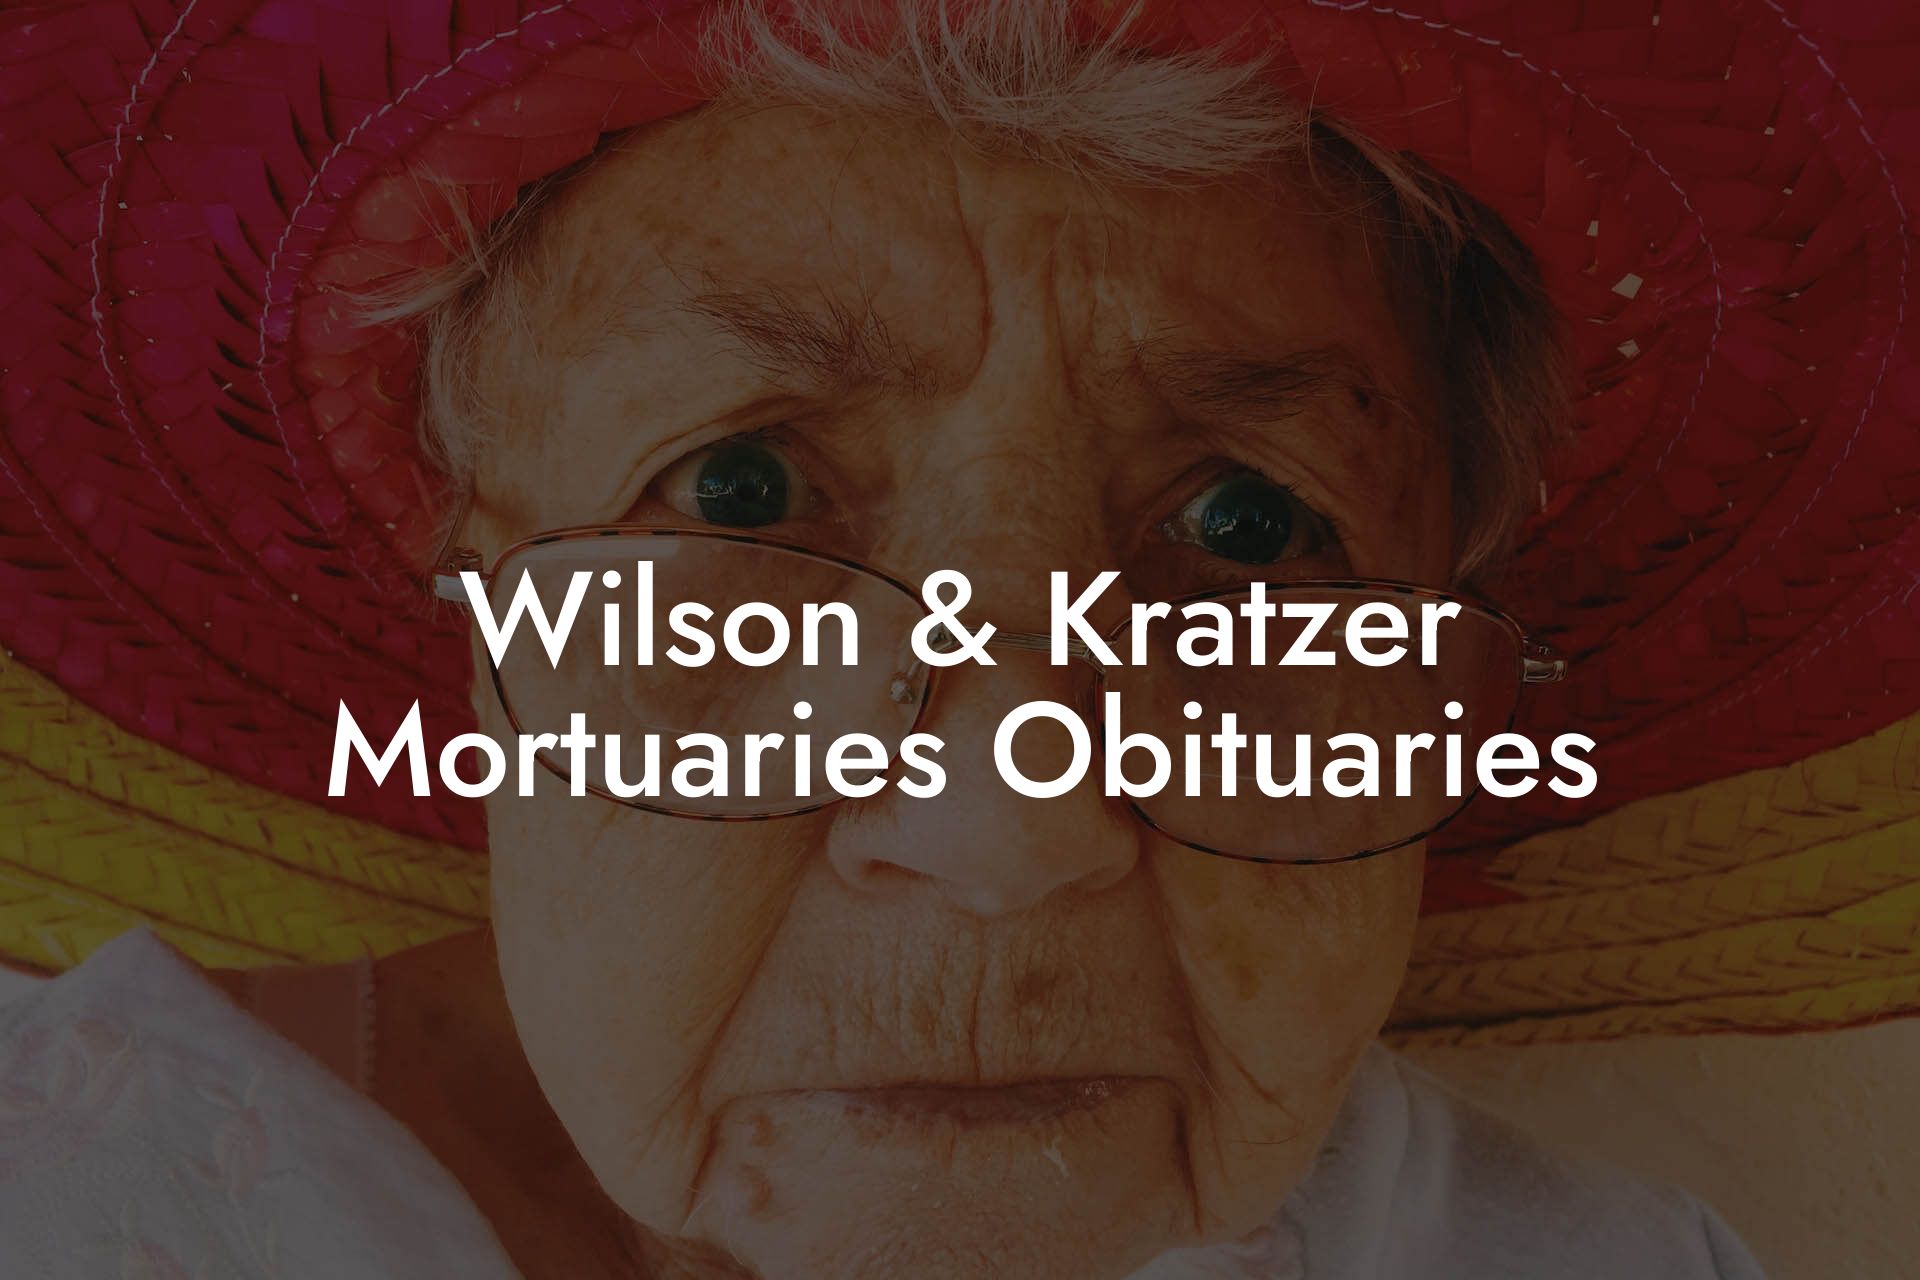 Wilson & Kratzer Mortuaries Obituaries